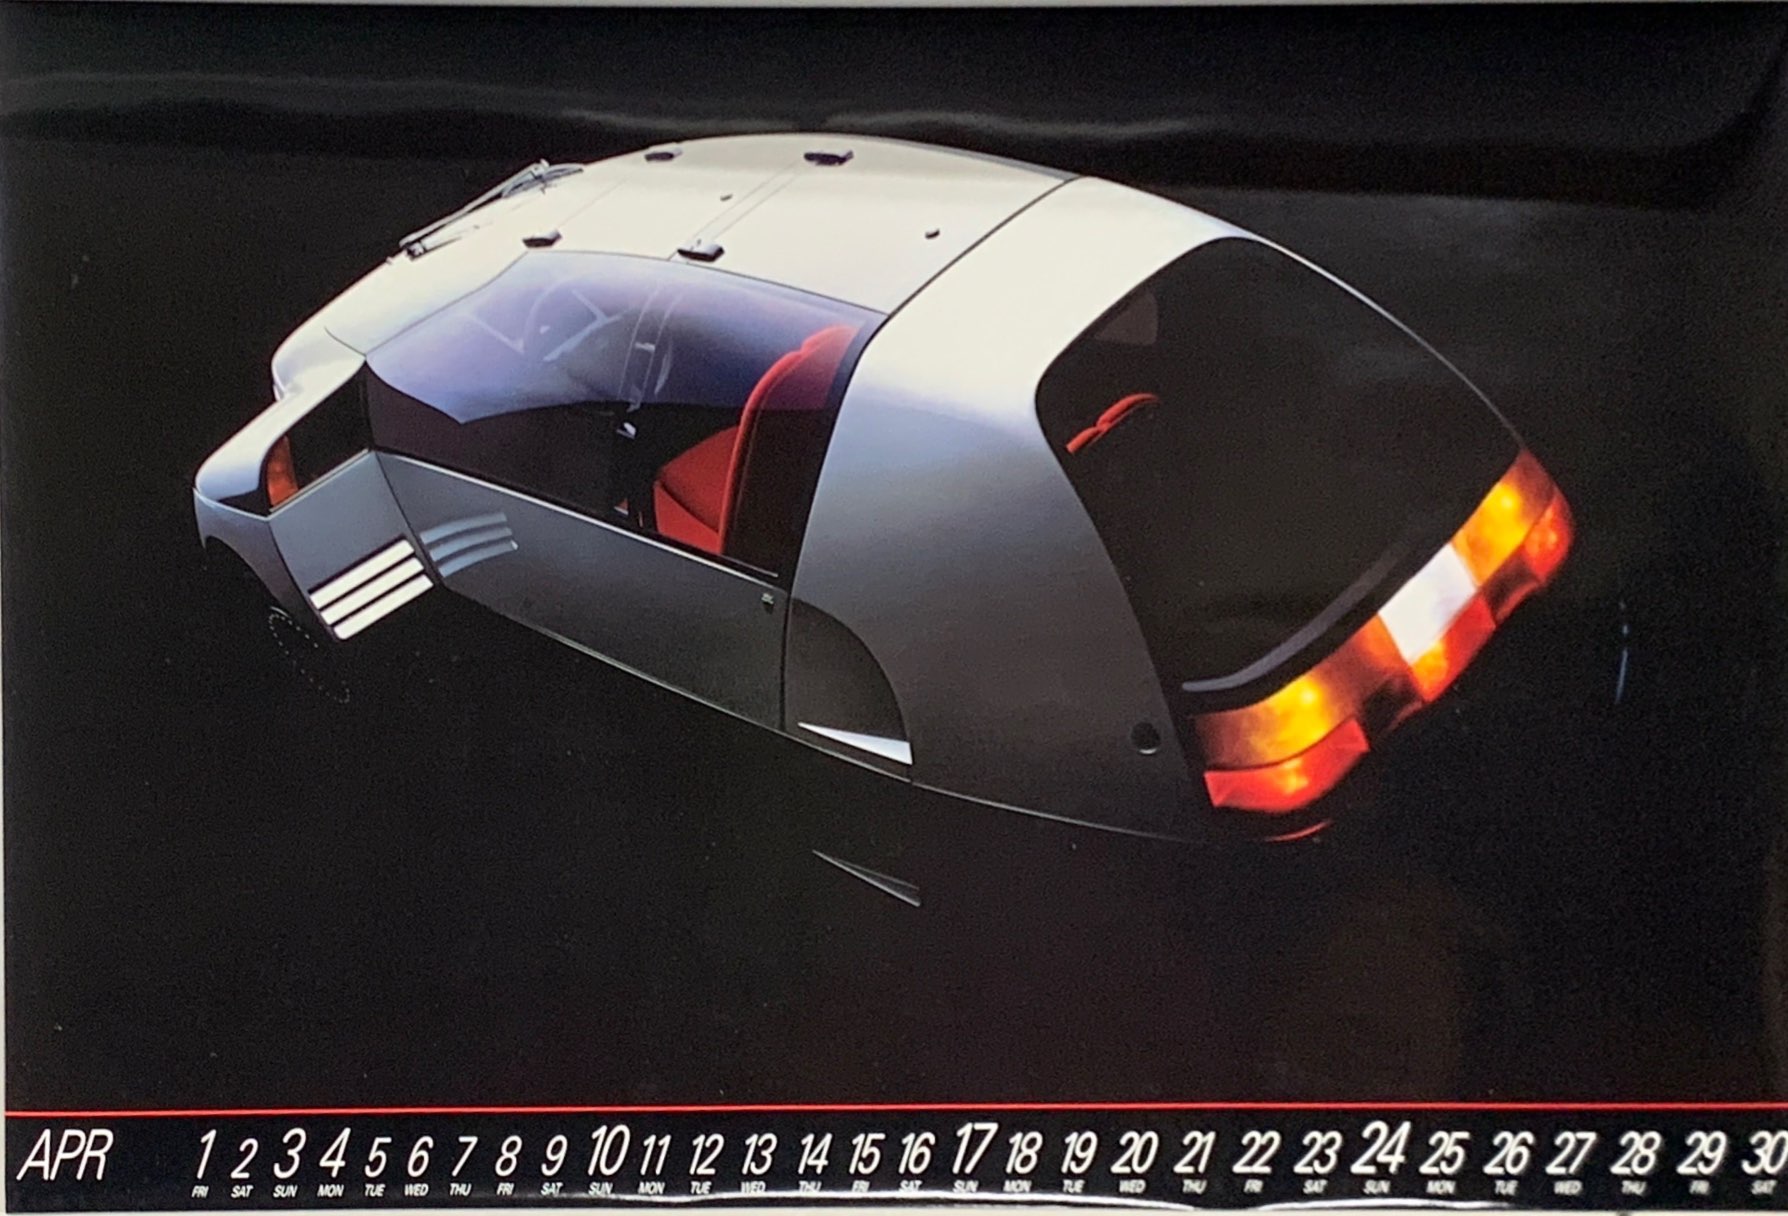 A 1988 Ford motorcar calendar, calendar size 52 x 40cm. - Image 2 of 3